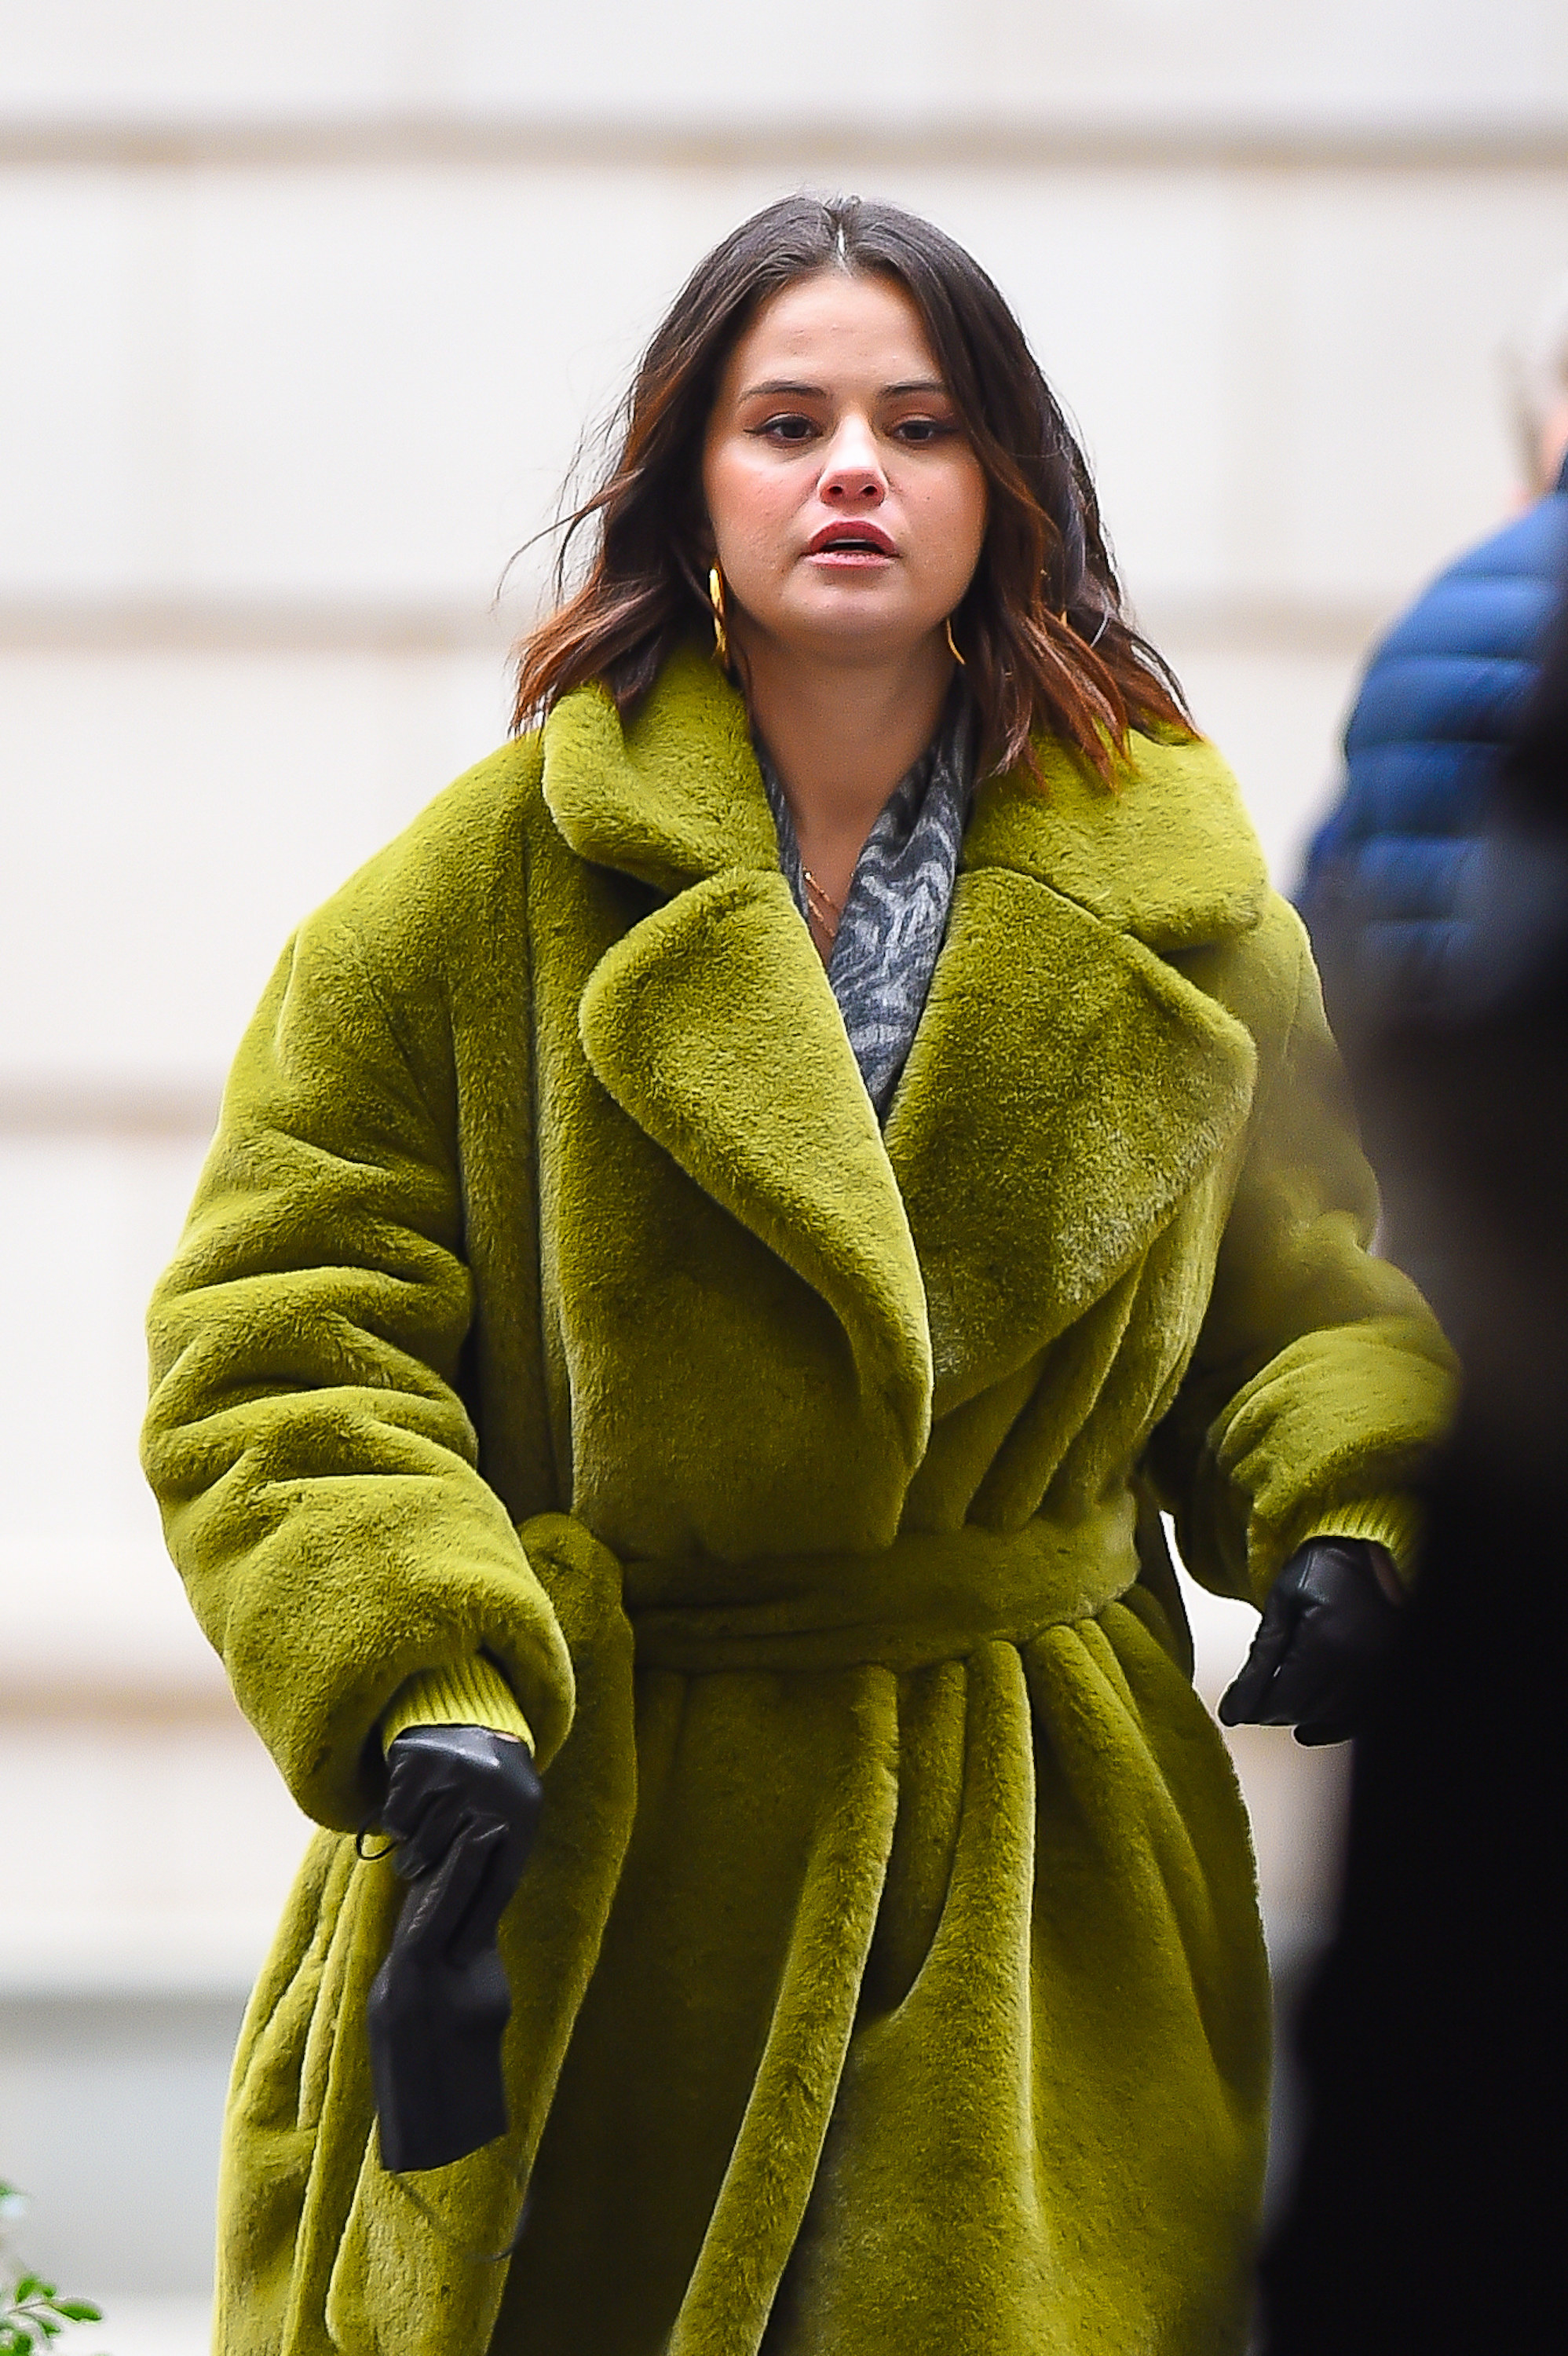 Selena walks in a fluffy coat